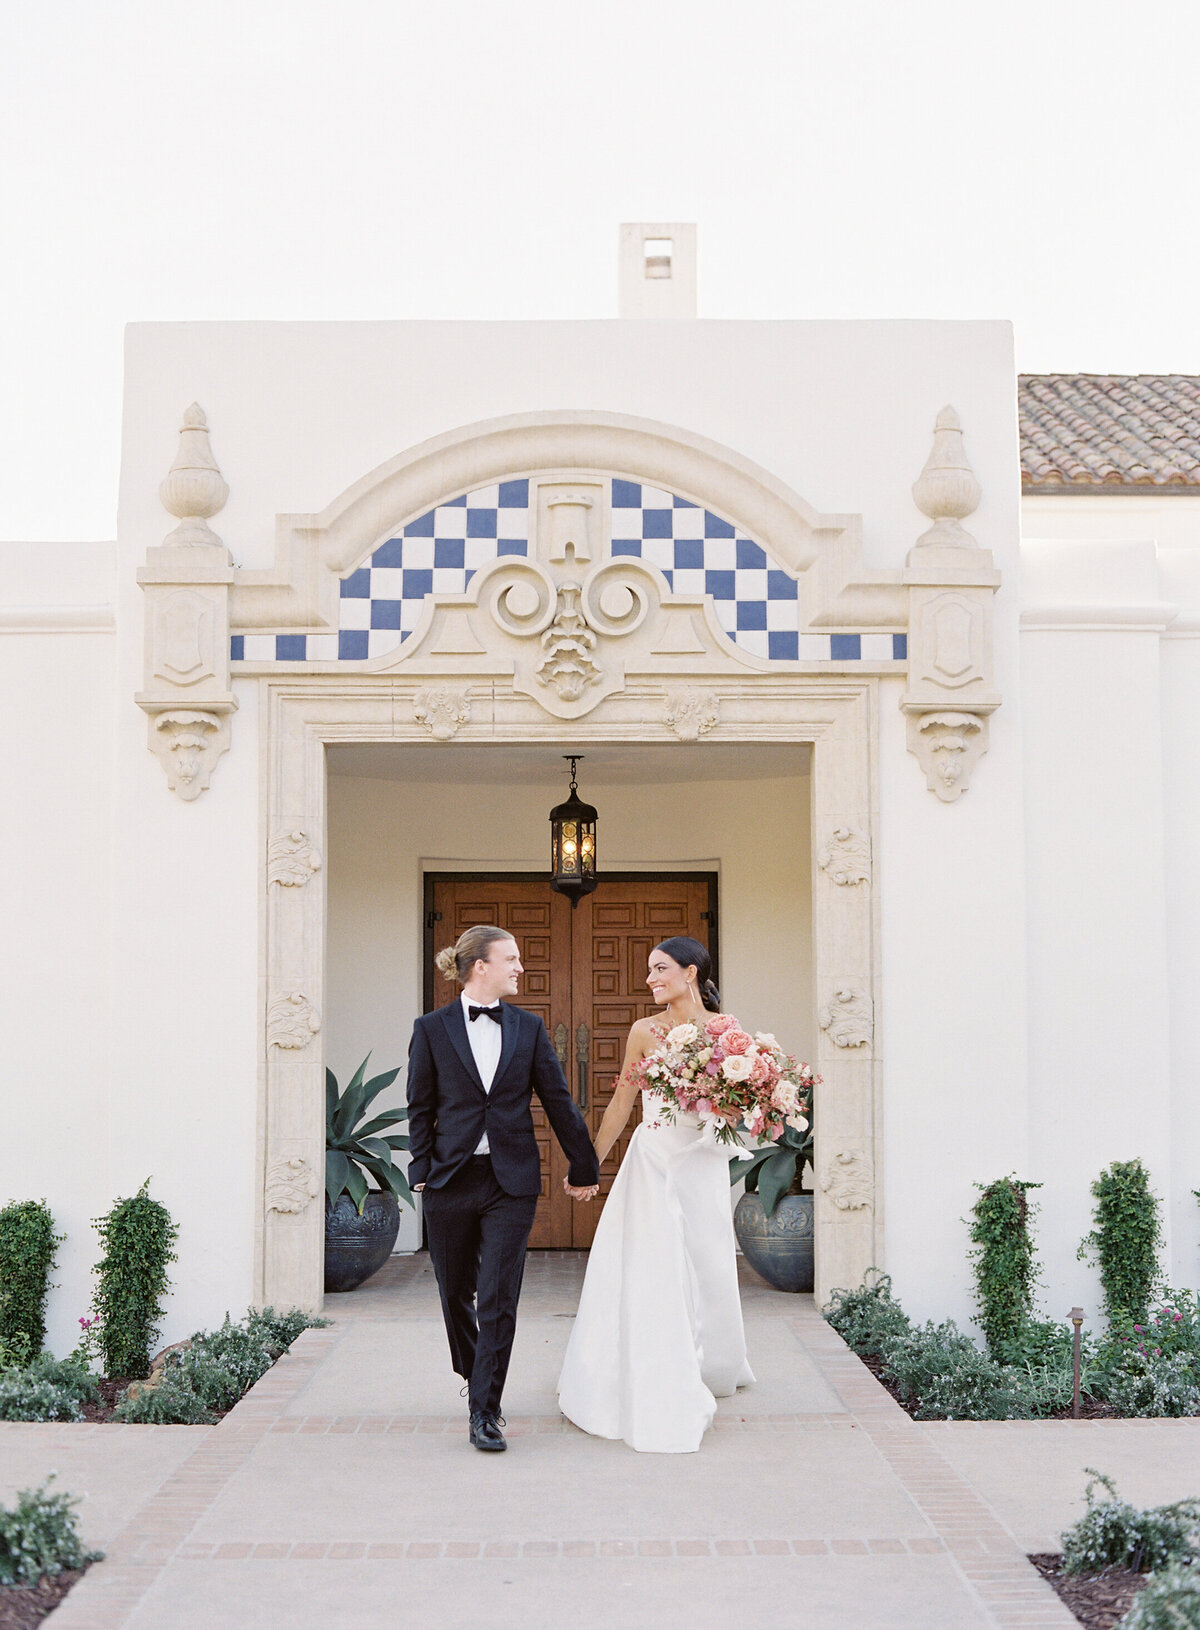 The main entrance for a Wedding at Montecito Club in Santa Barbara. Photographed by Santa Barbara Wedding Photographers Pinnel Photography.